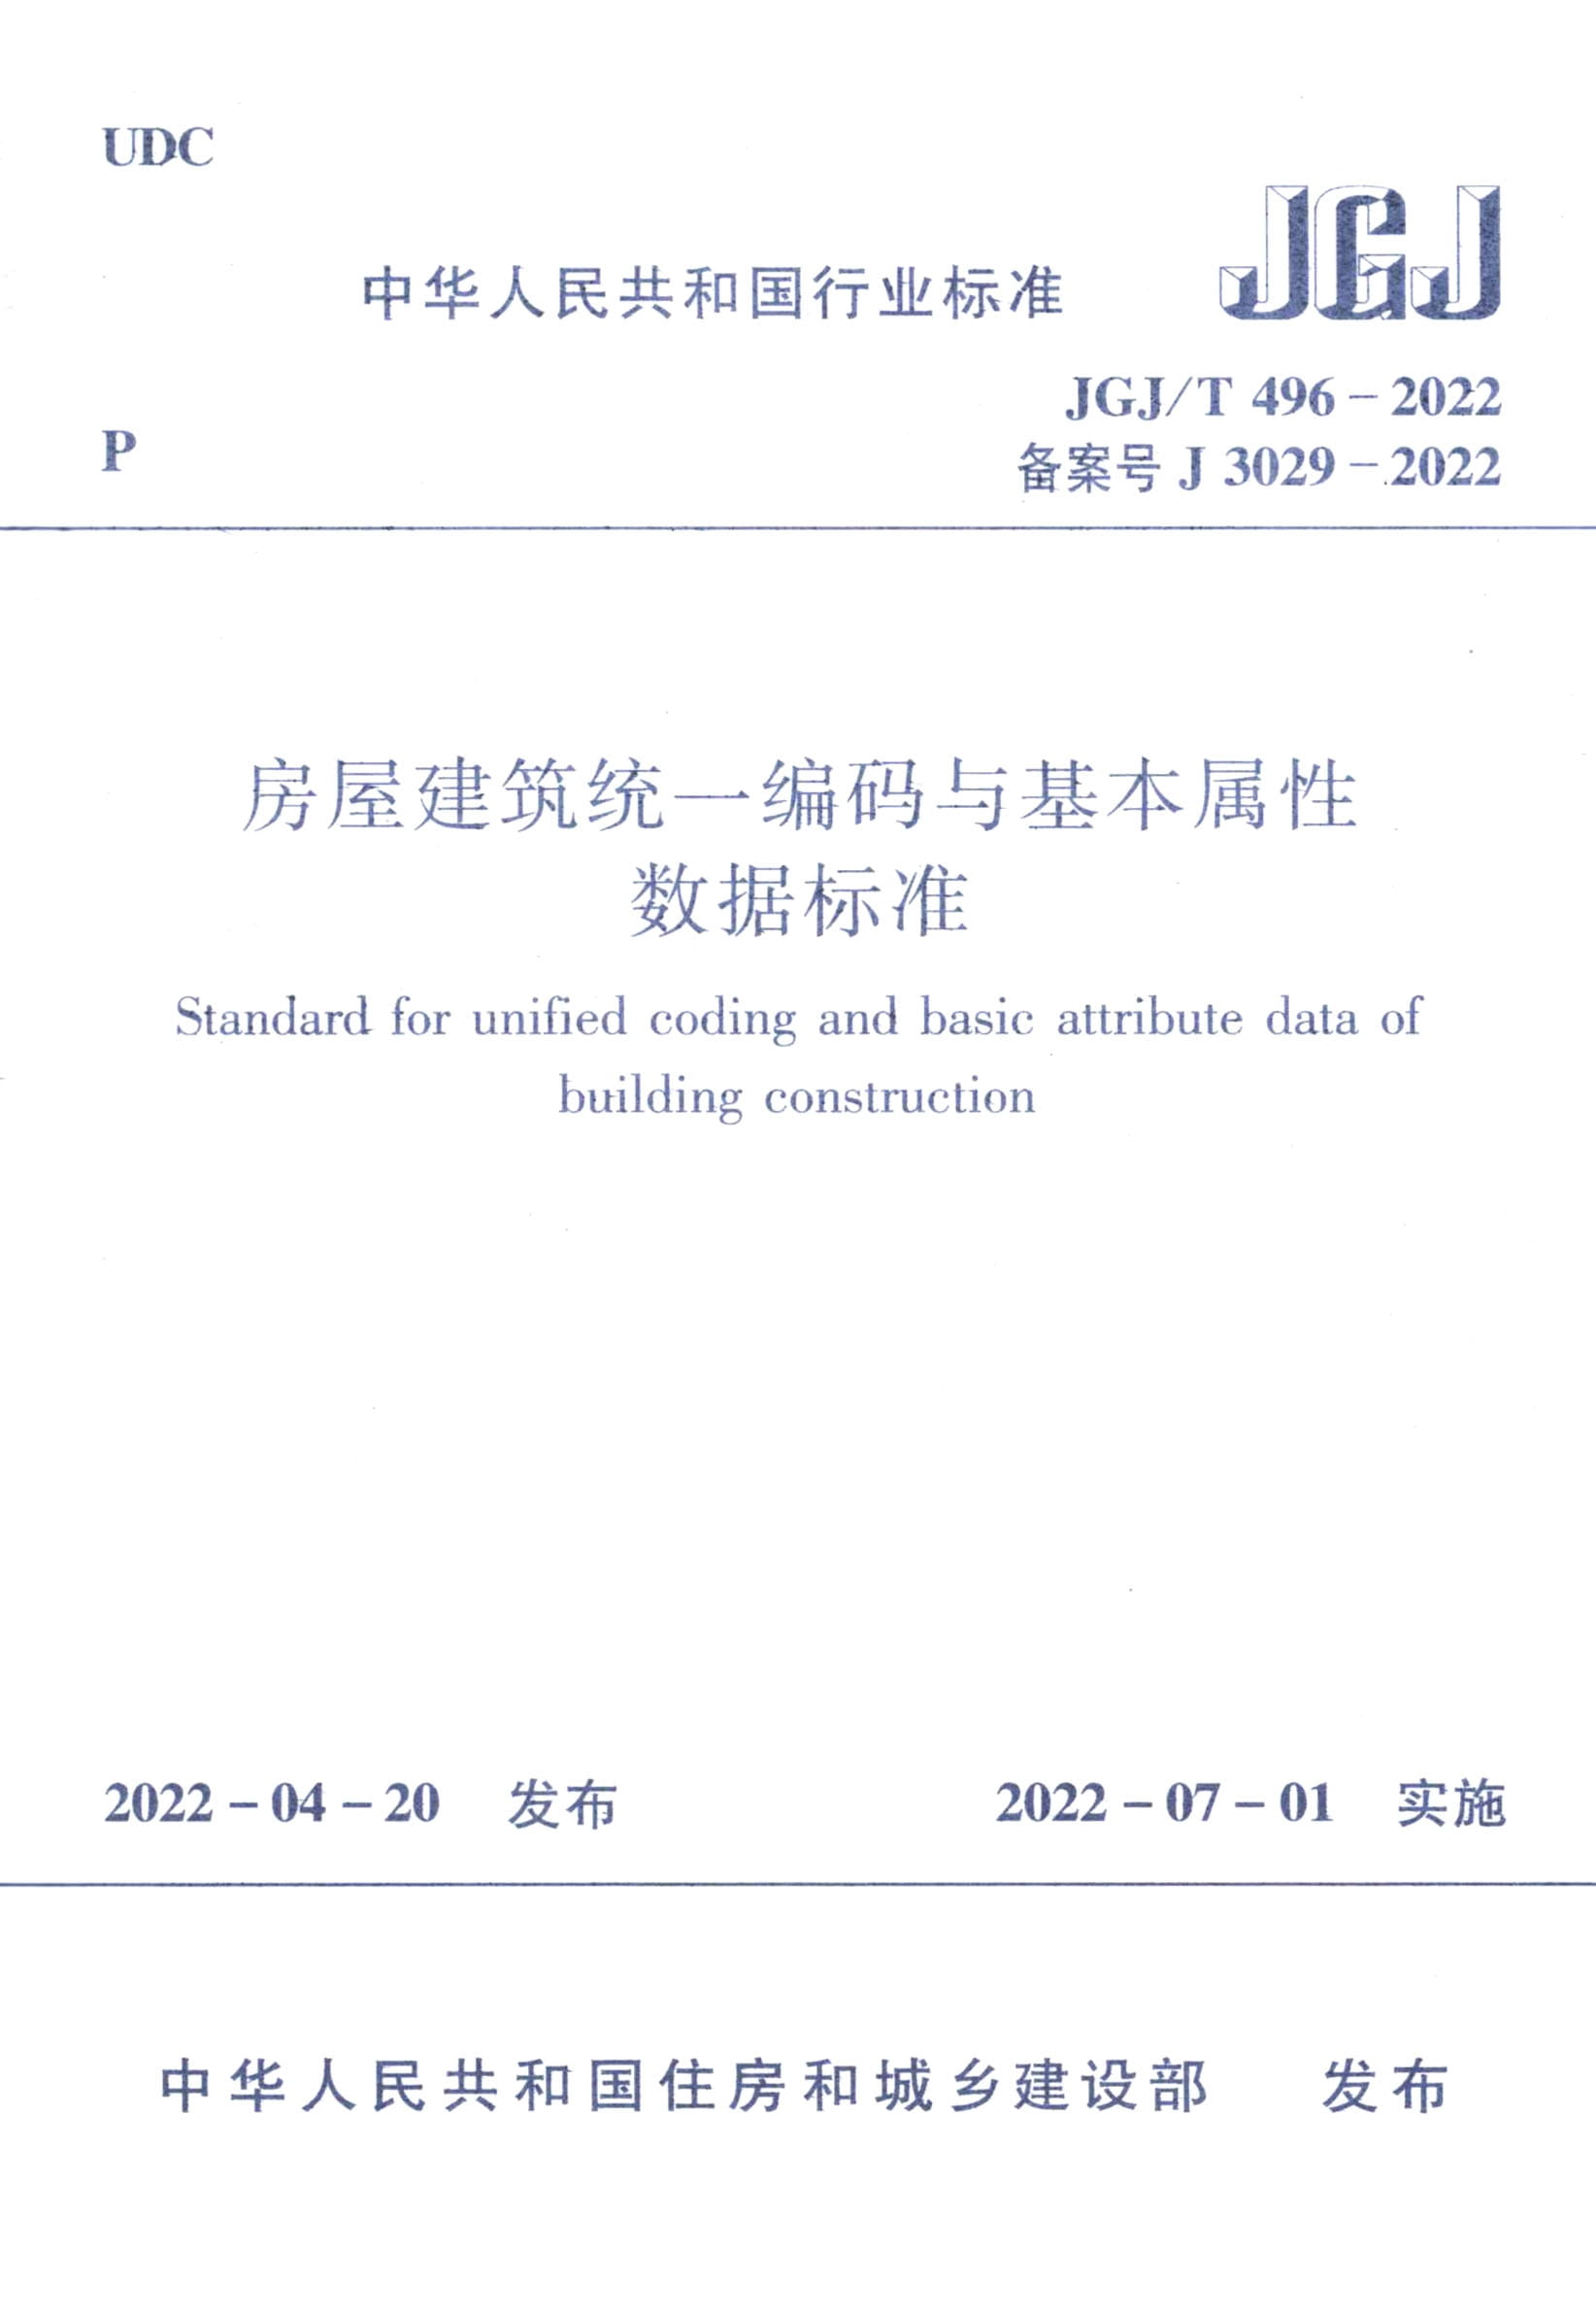 JGJ/T 496-2022 房屋建筑统一编码与基本属性数据标准